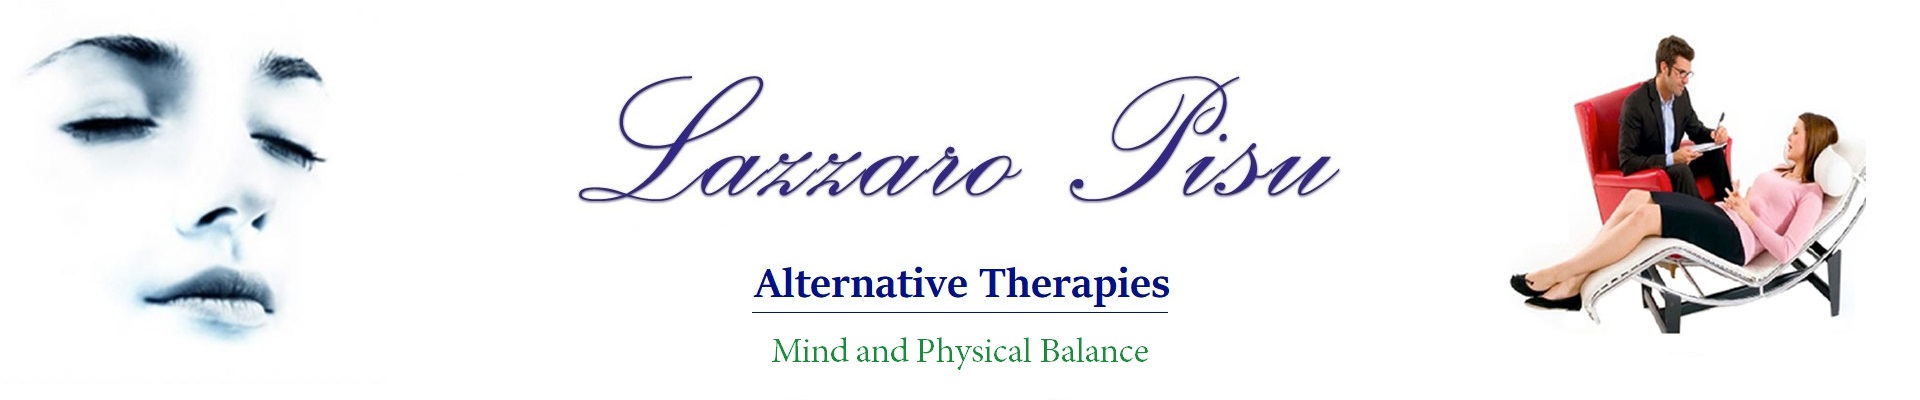 lazzaro pisu, alternative therapies, alternative medicine, counselling service, hypnotherapy,